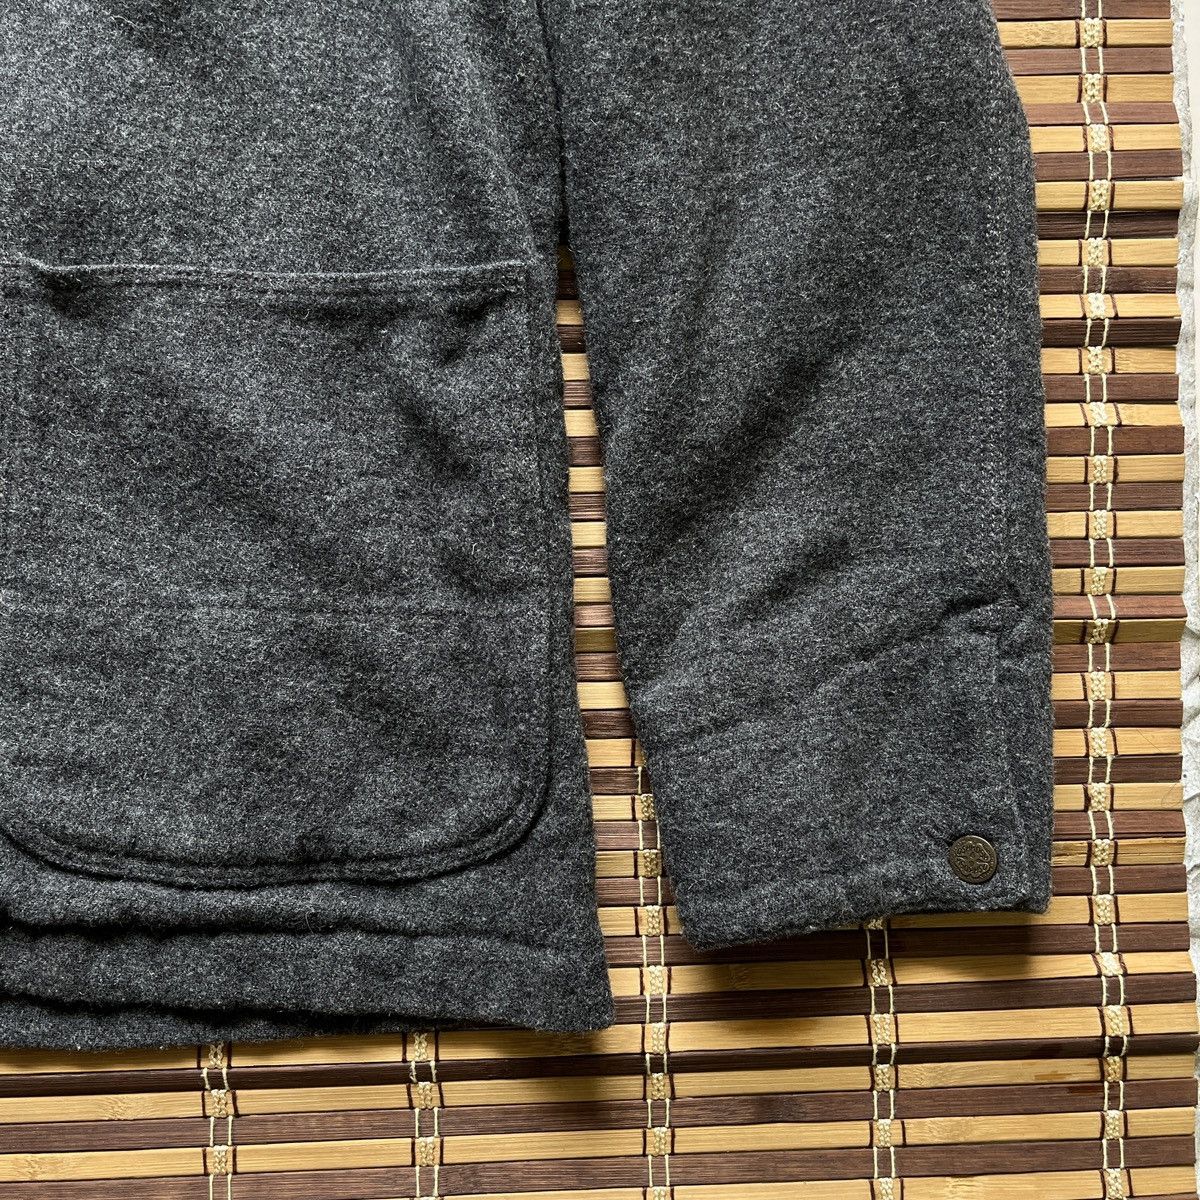 Oshkosh Blanket Fall Winter Wool Jacket Japan - 8